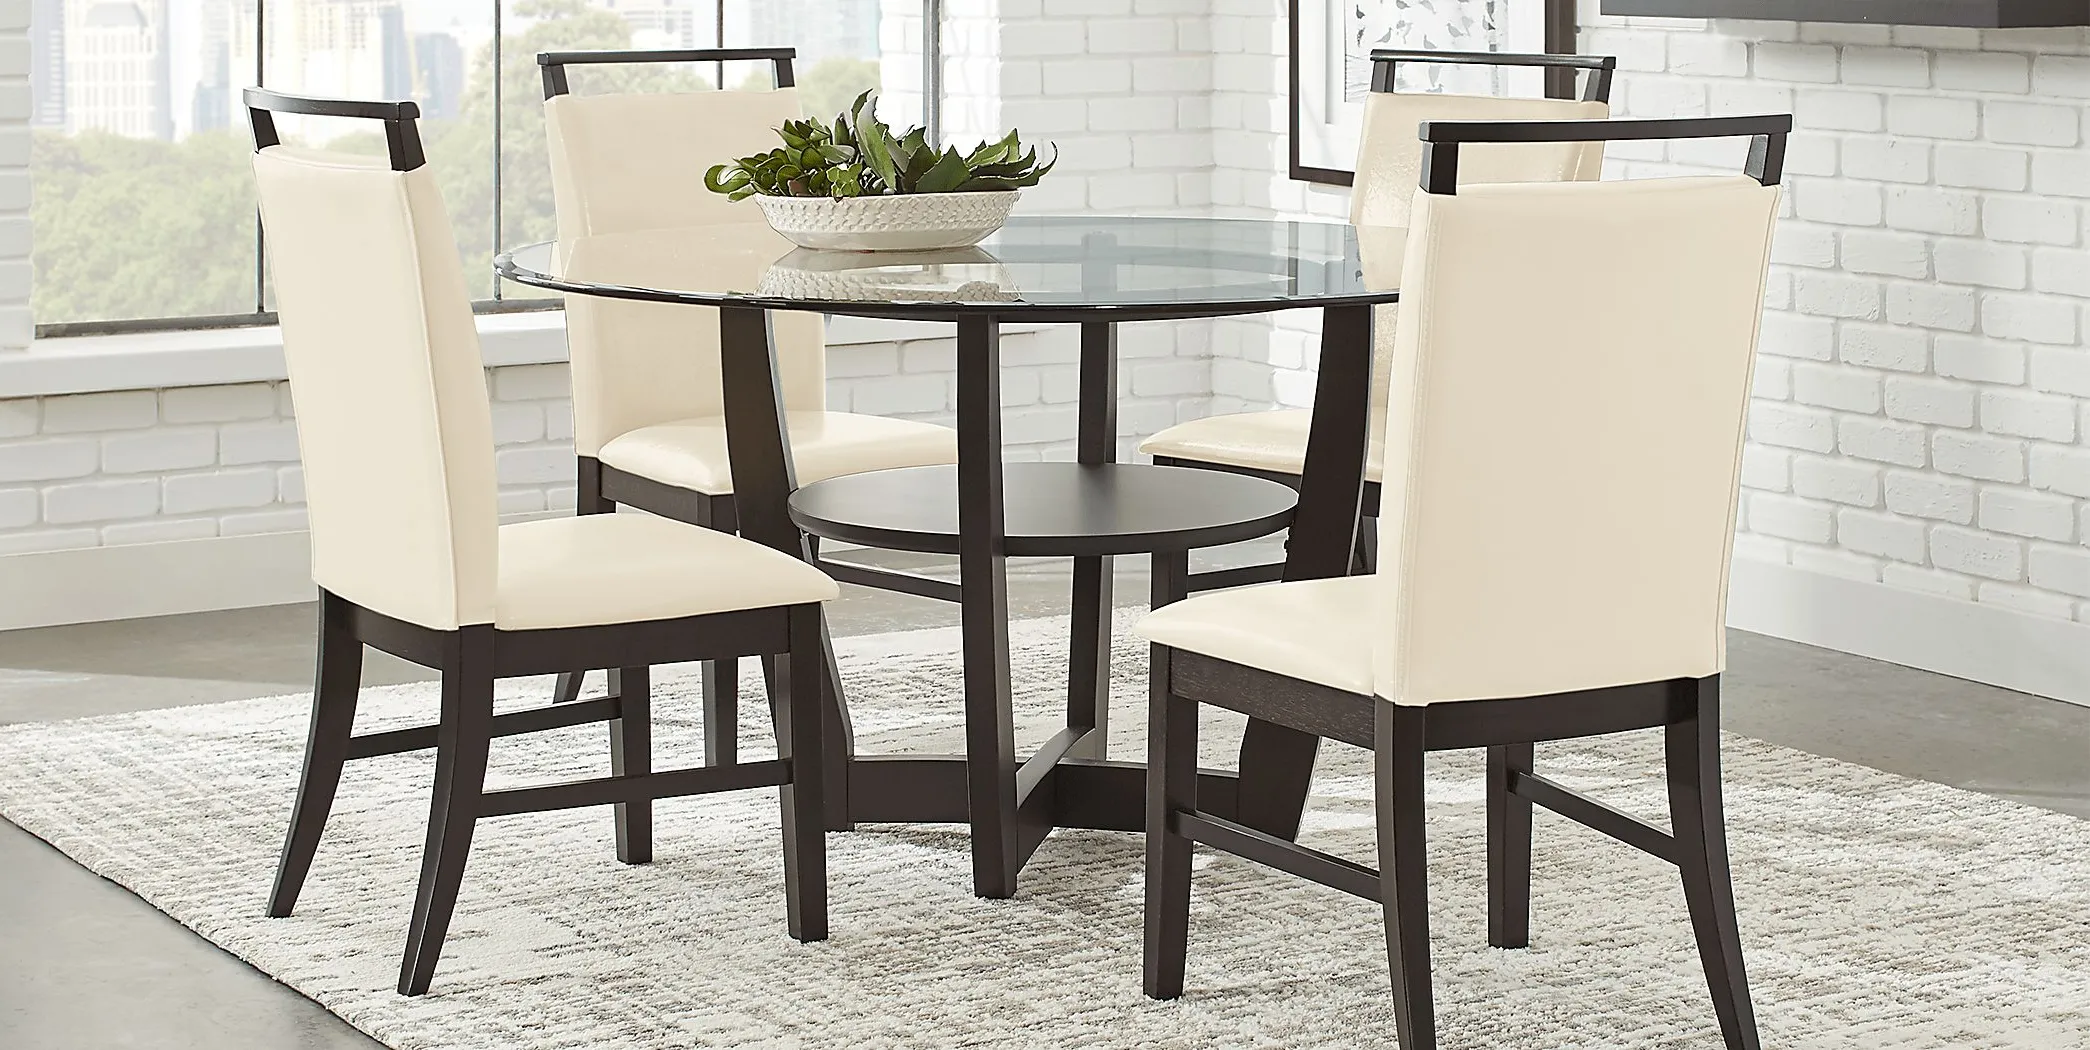 Ciara Espresso 5 Pc 54"" Round Dining Set with Cream Chairs